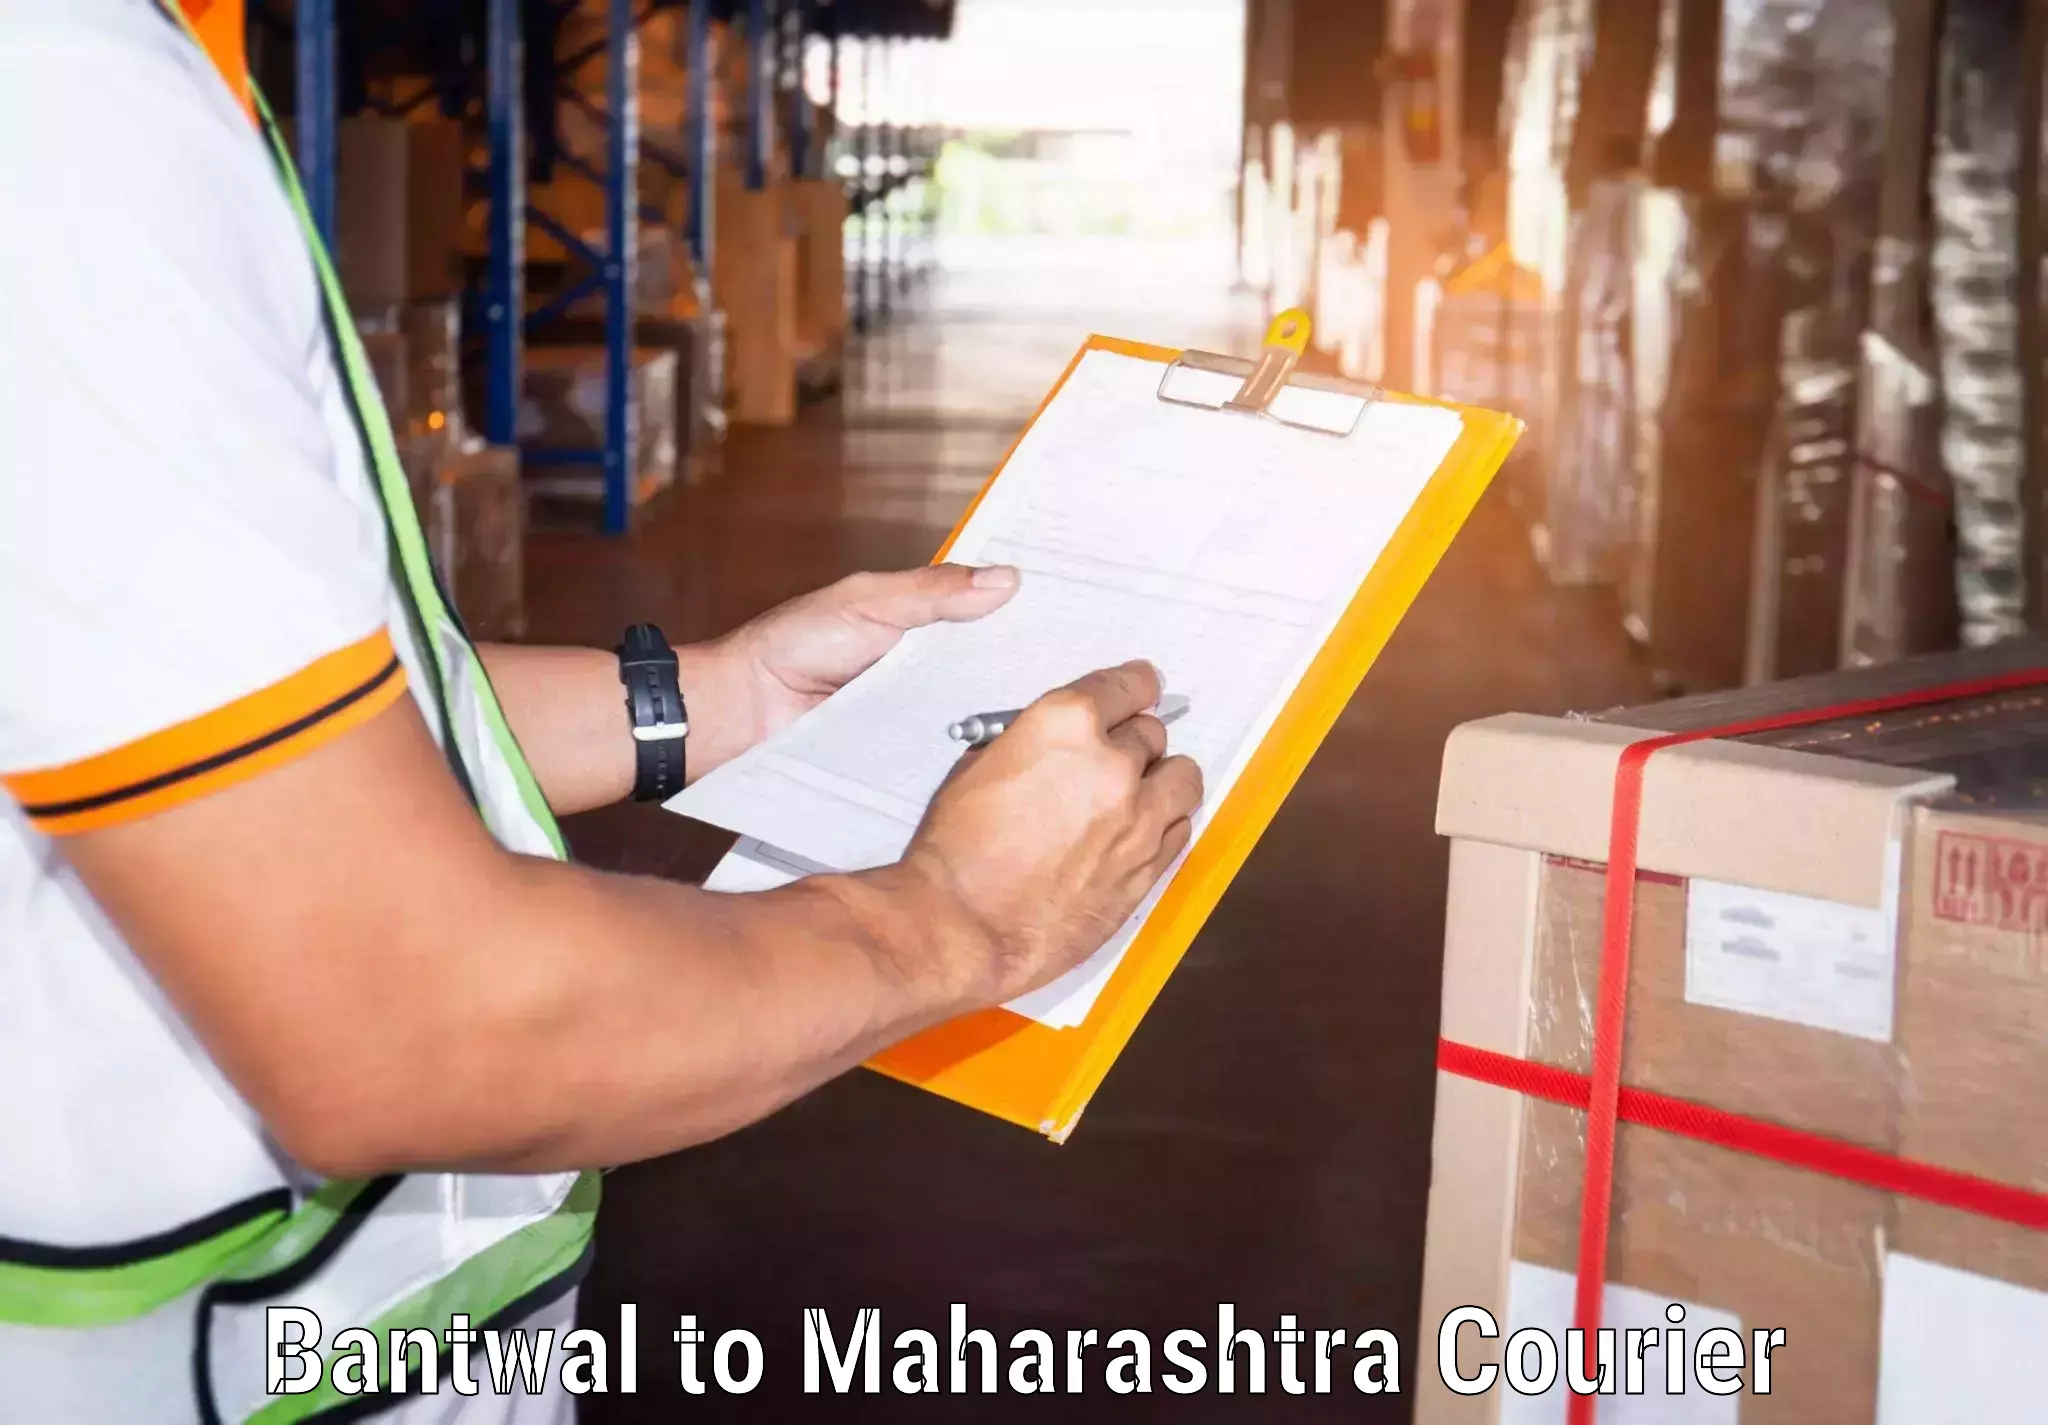 Express logistics providers Bantwal to Mumbai